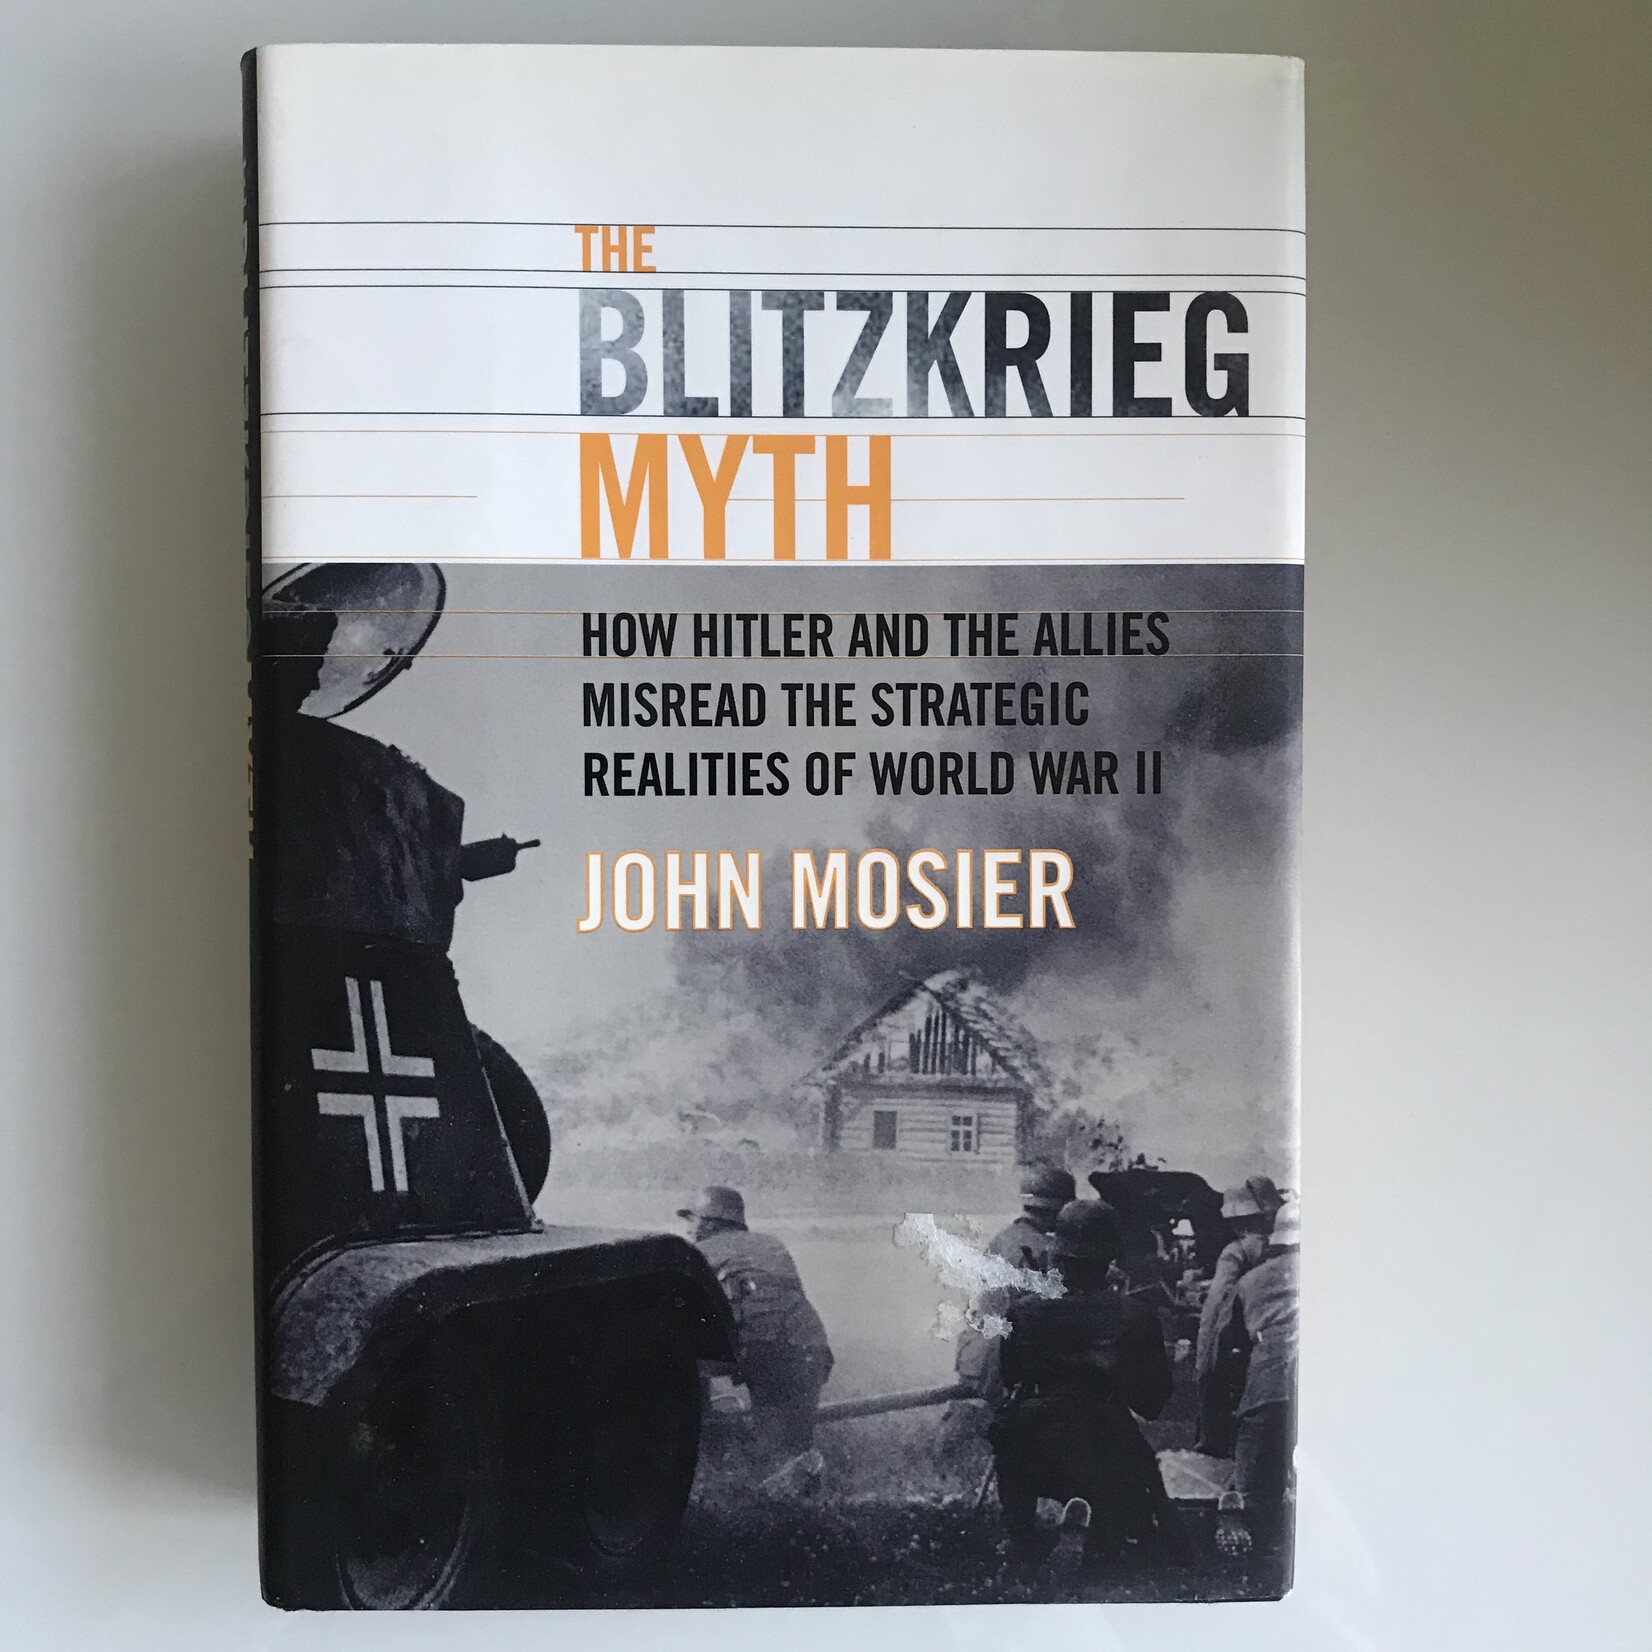 John Mosier - The Bliztkrieg Myth: How Hitler And The Allies Misread The Strategic Realities Of World War II - Hardback (USED)